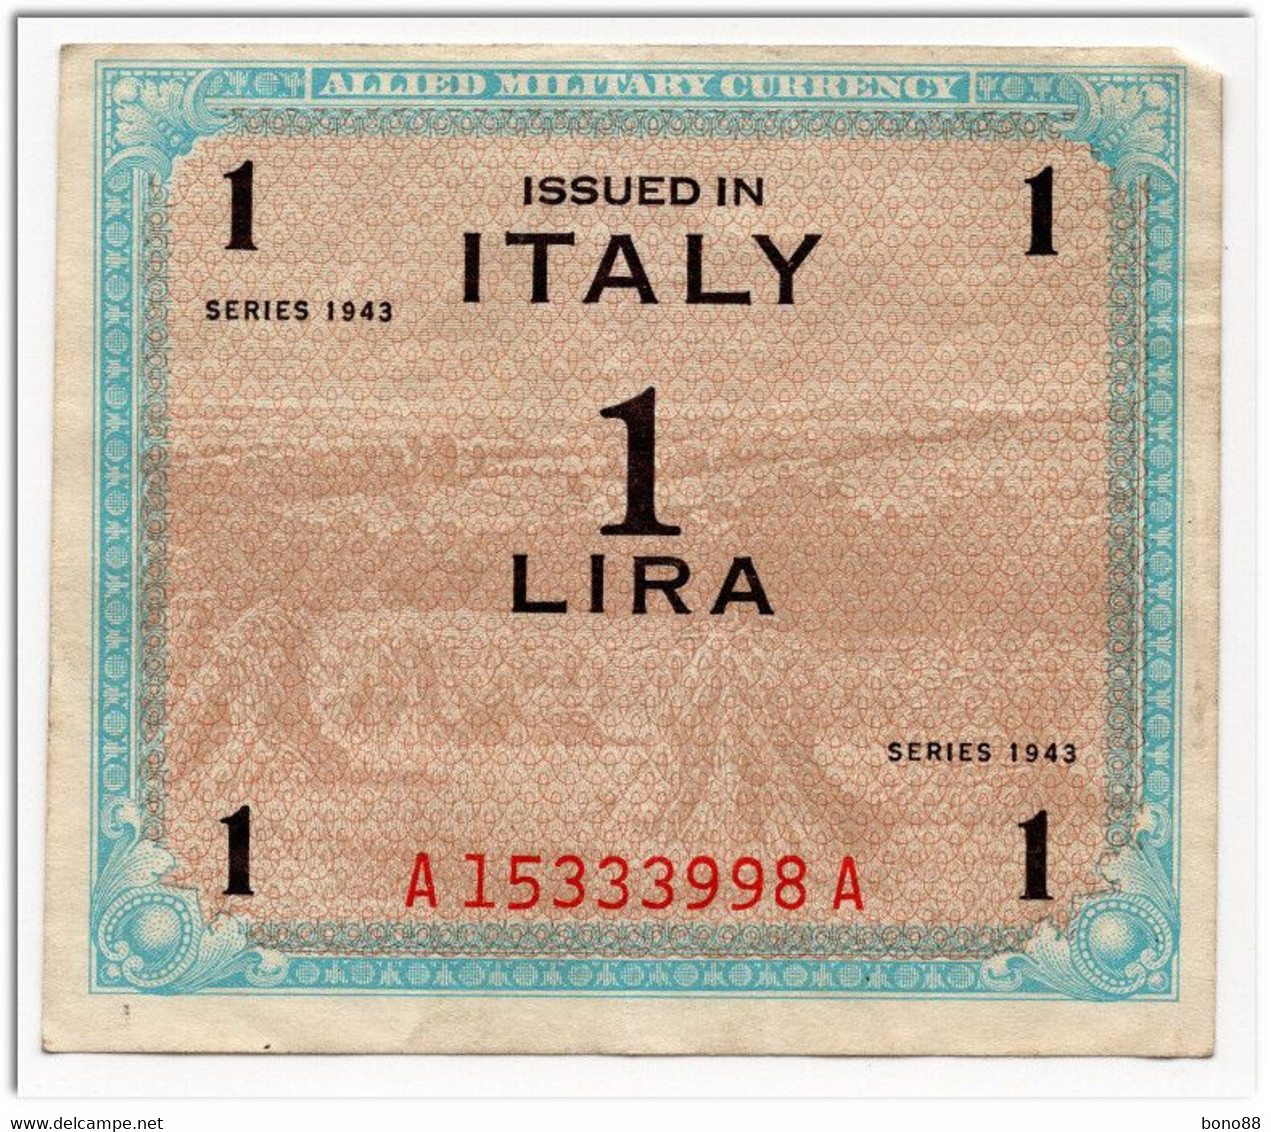 ITALY,ALLIED MILITARY CURRENCY,1 LIRE,1943,P.M10,VF - Occupazione Alleata Seconda Guerra Mondiale